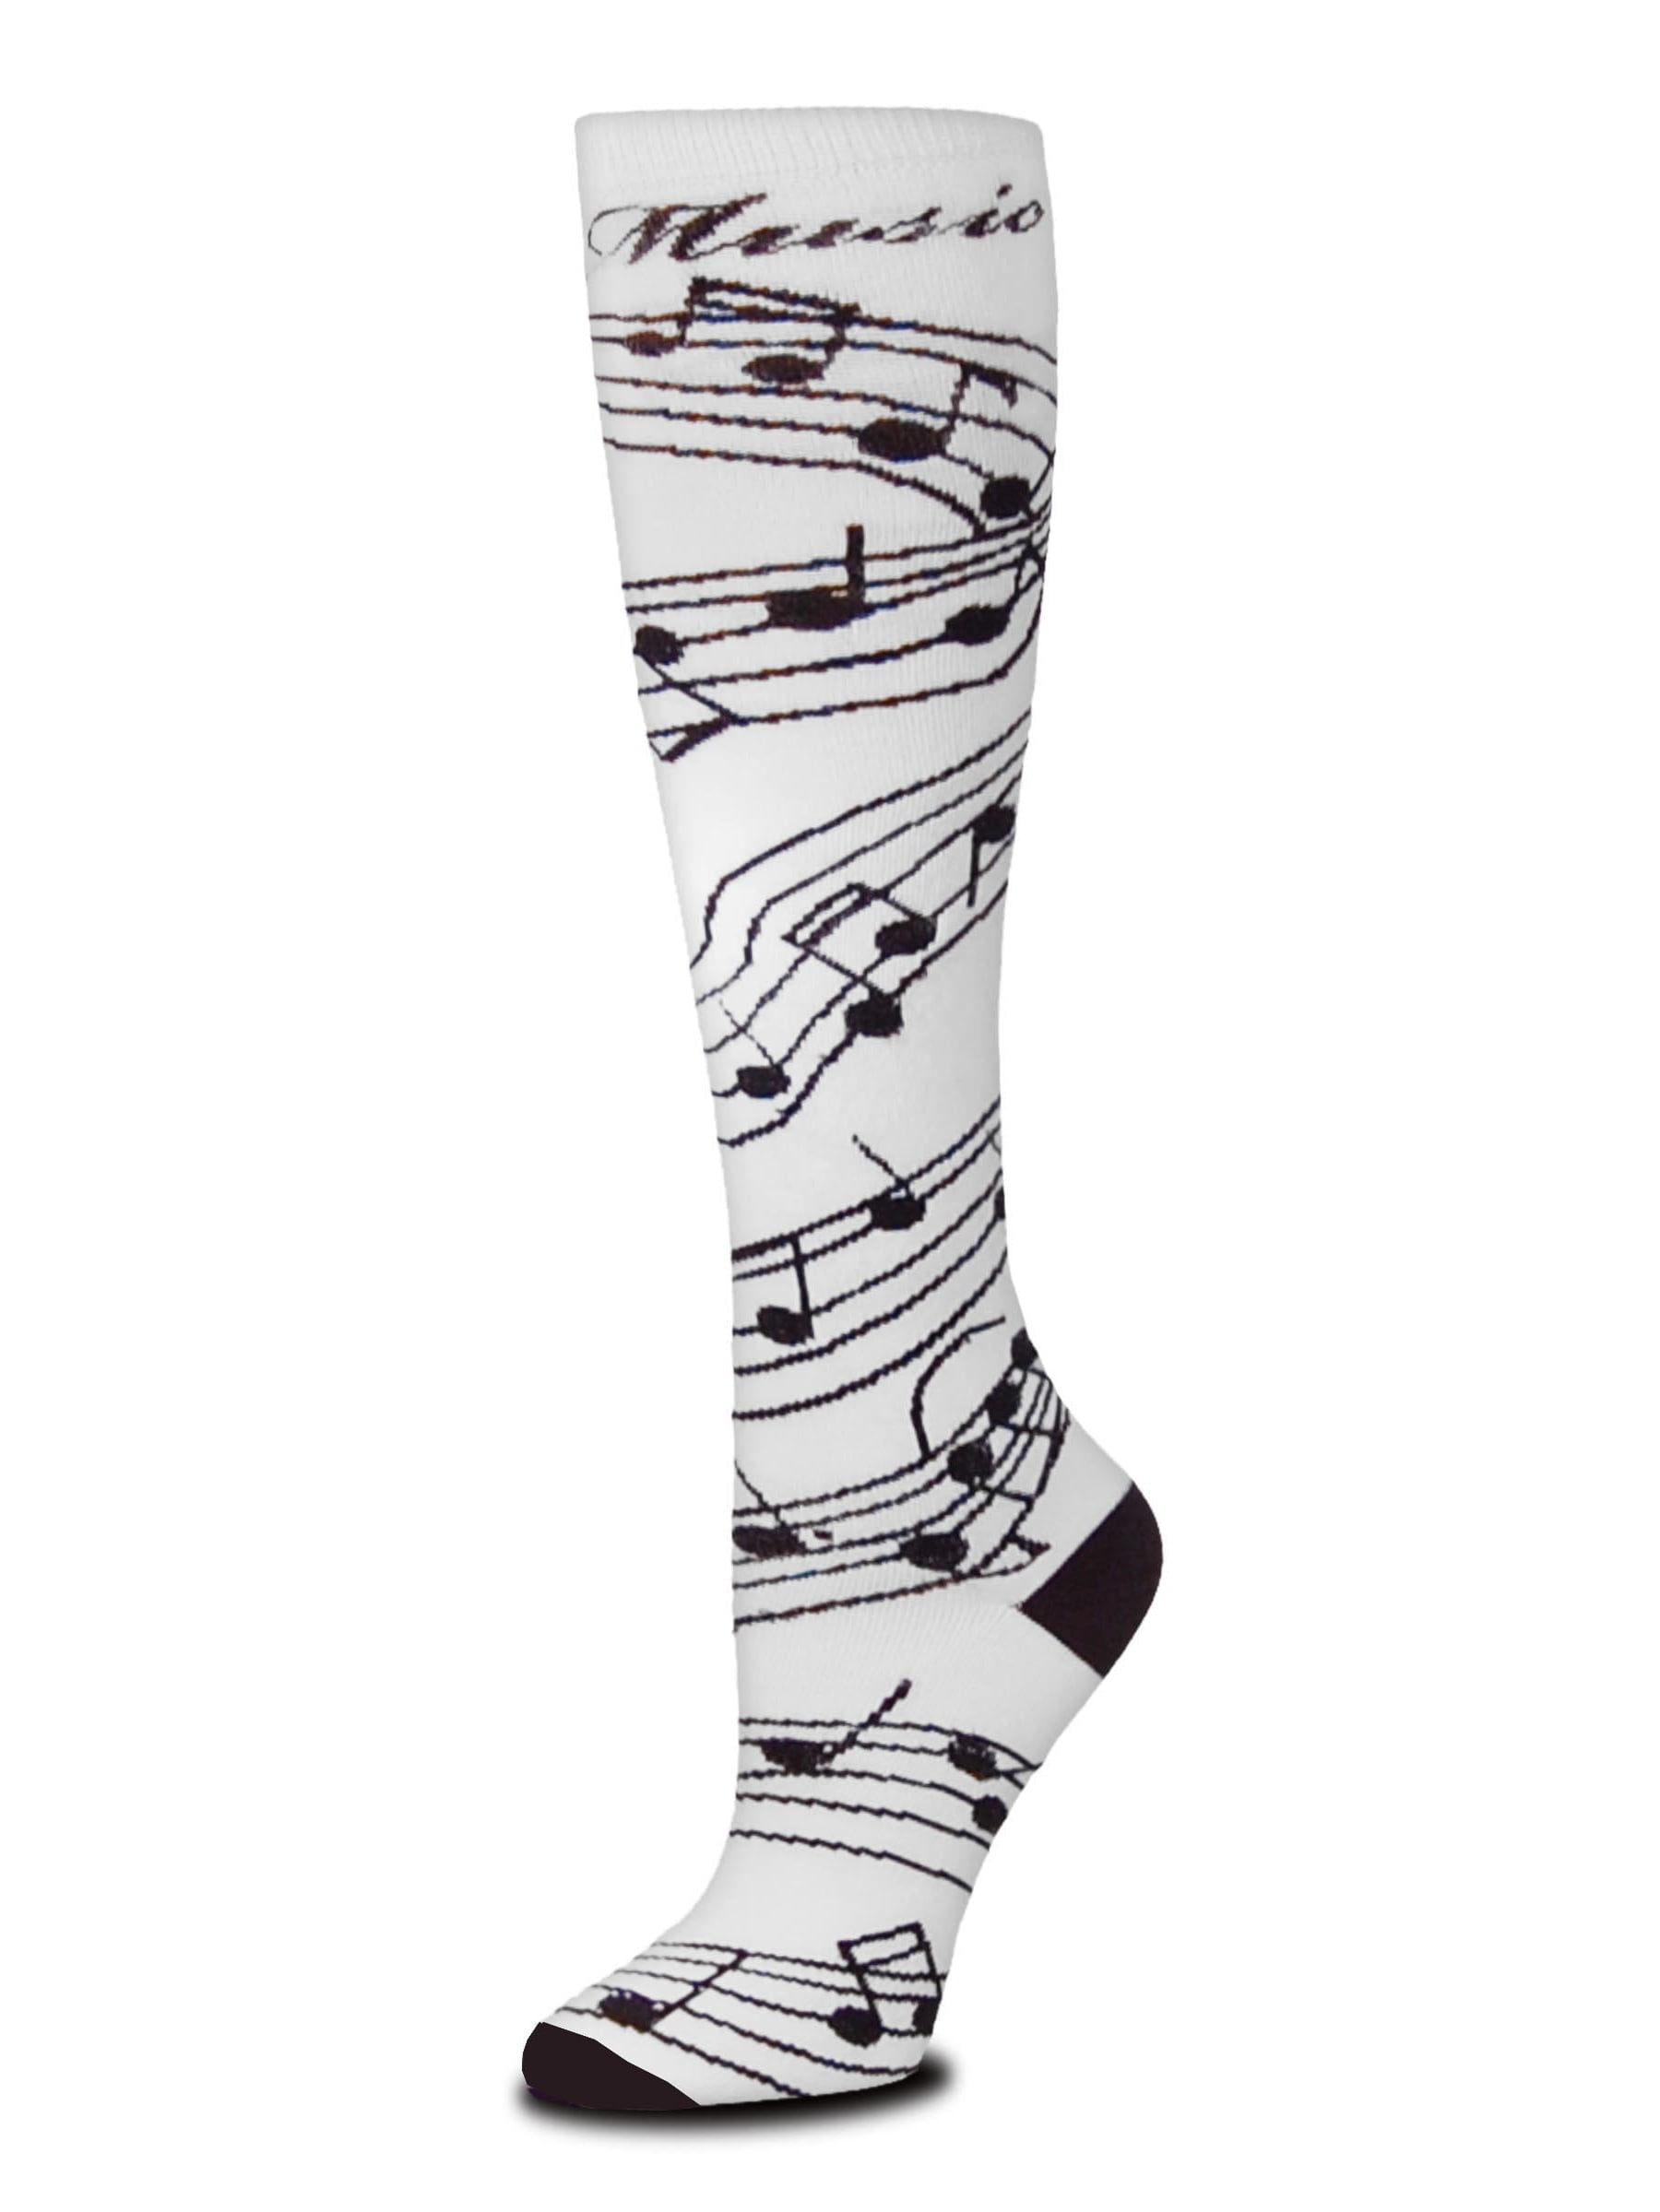 Coloured Music Staves Unisex Novelty Ankle Socks Adult Size 6-11 